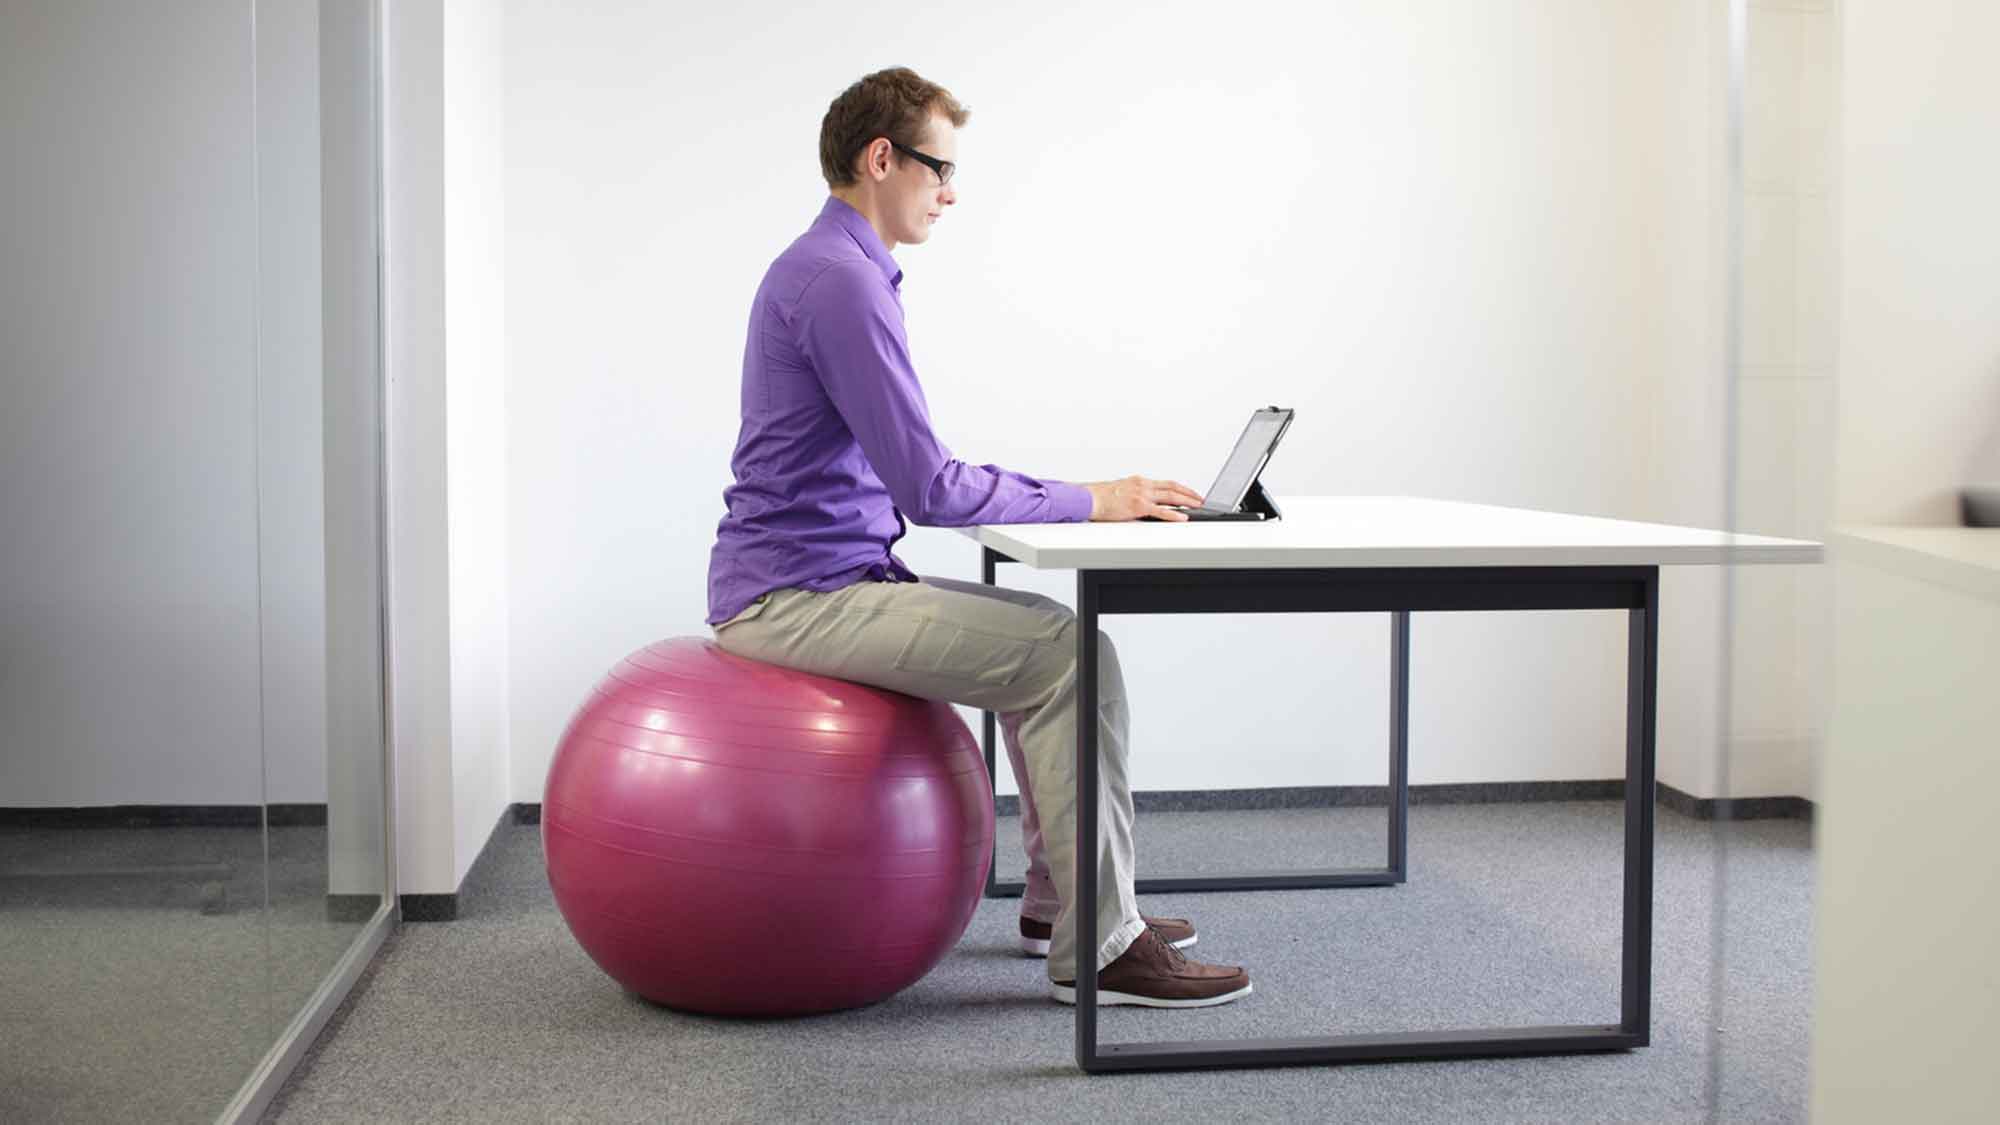 Gesünder im Büro – Rückenschmerzen vorbeugen trotz langen Sitzens